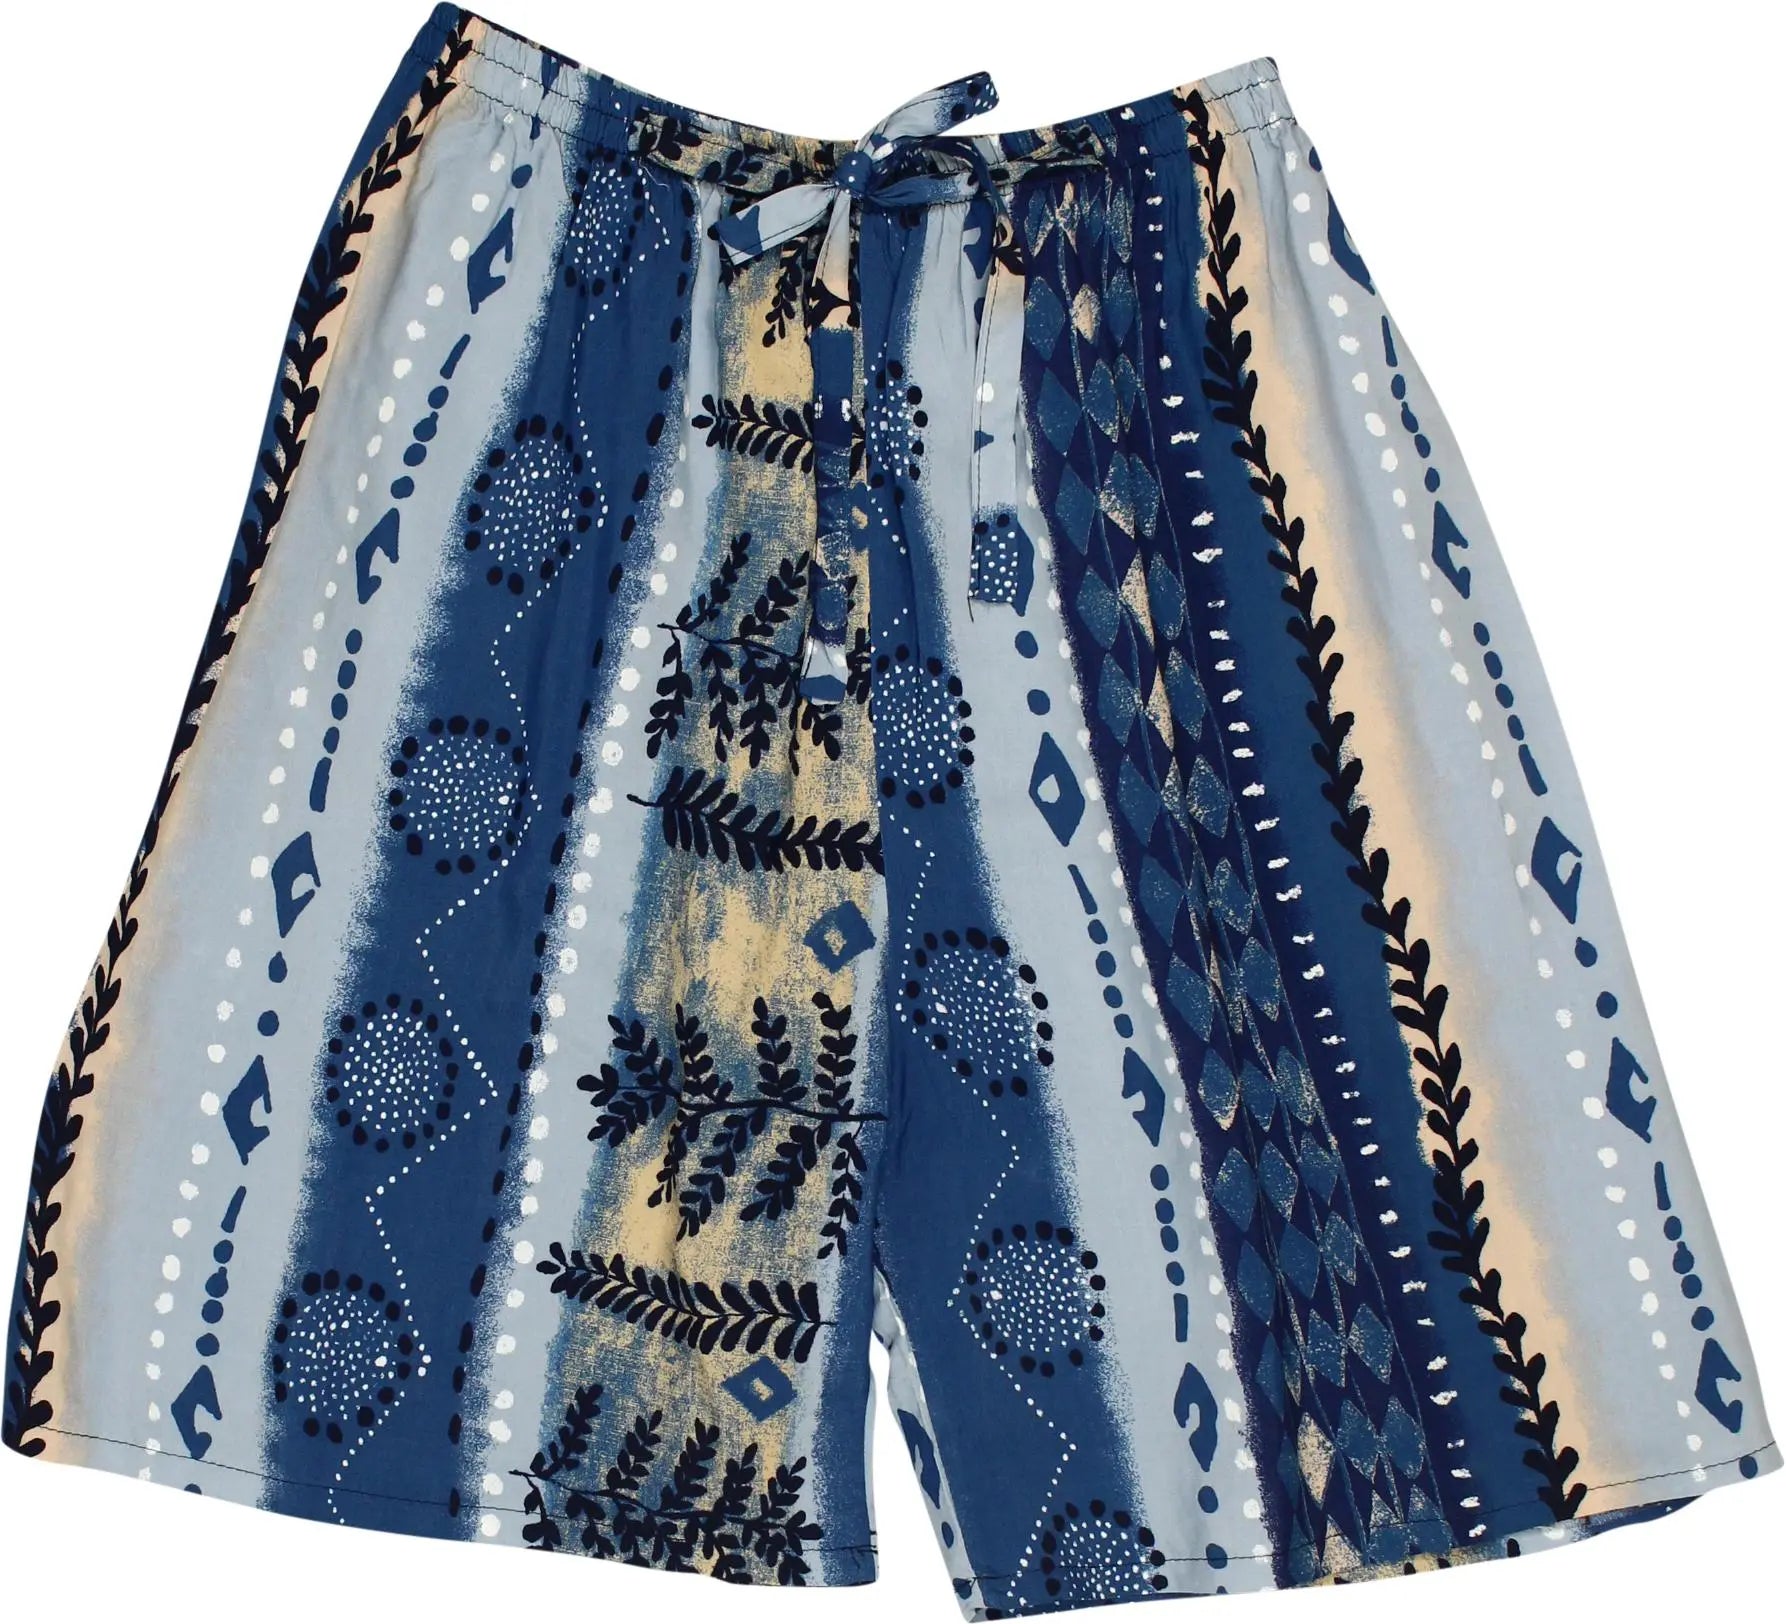 Lanaya - Patterned Drawstring Shorts- ThriftTale.com - Vintage and second handclothing